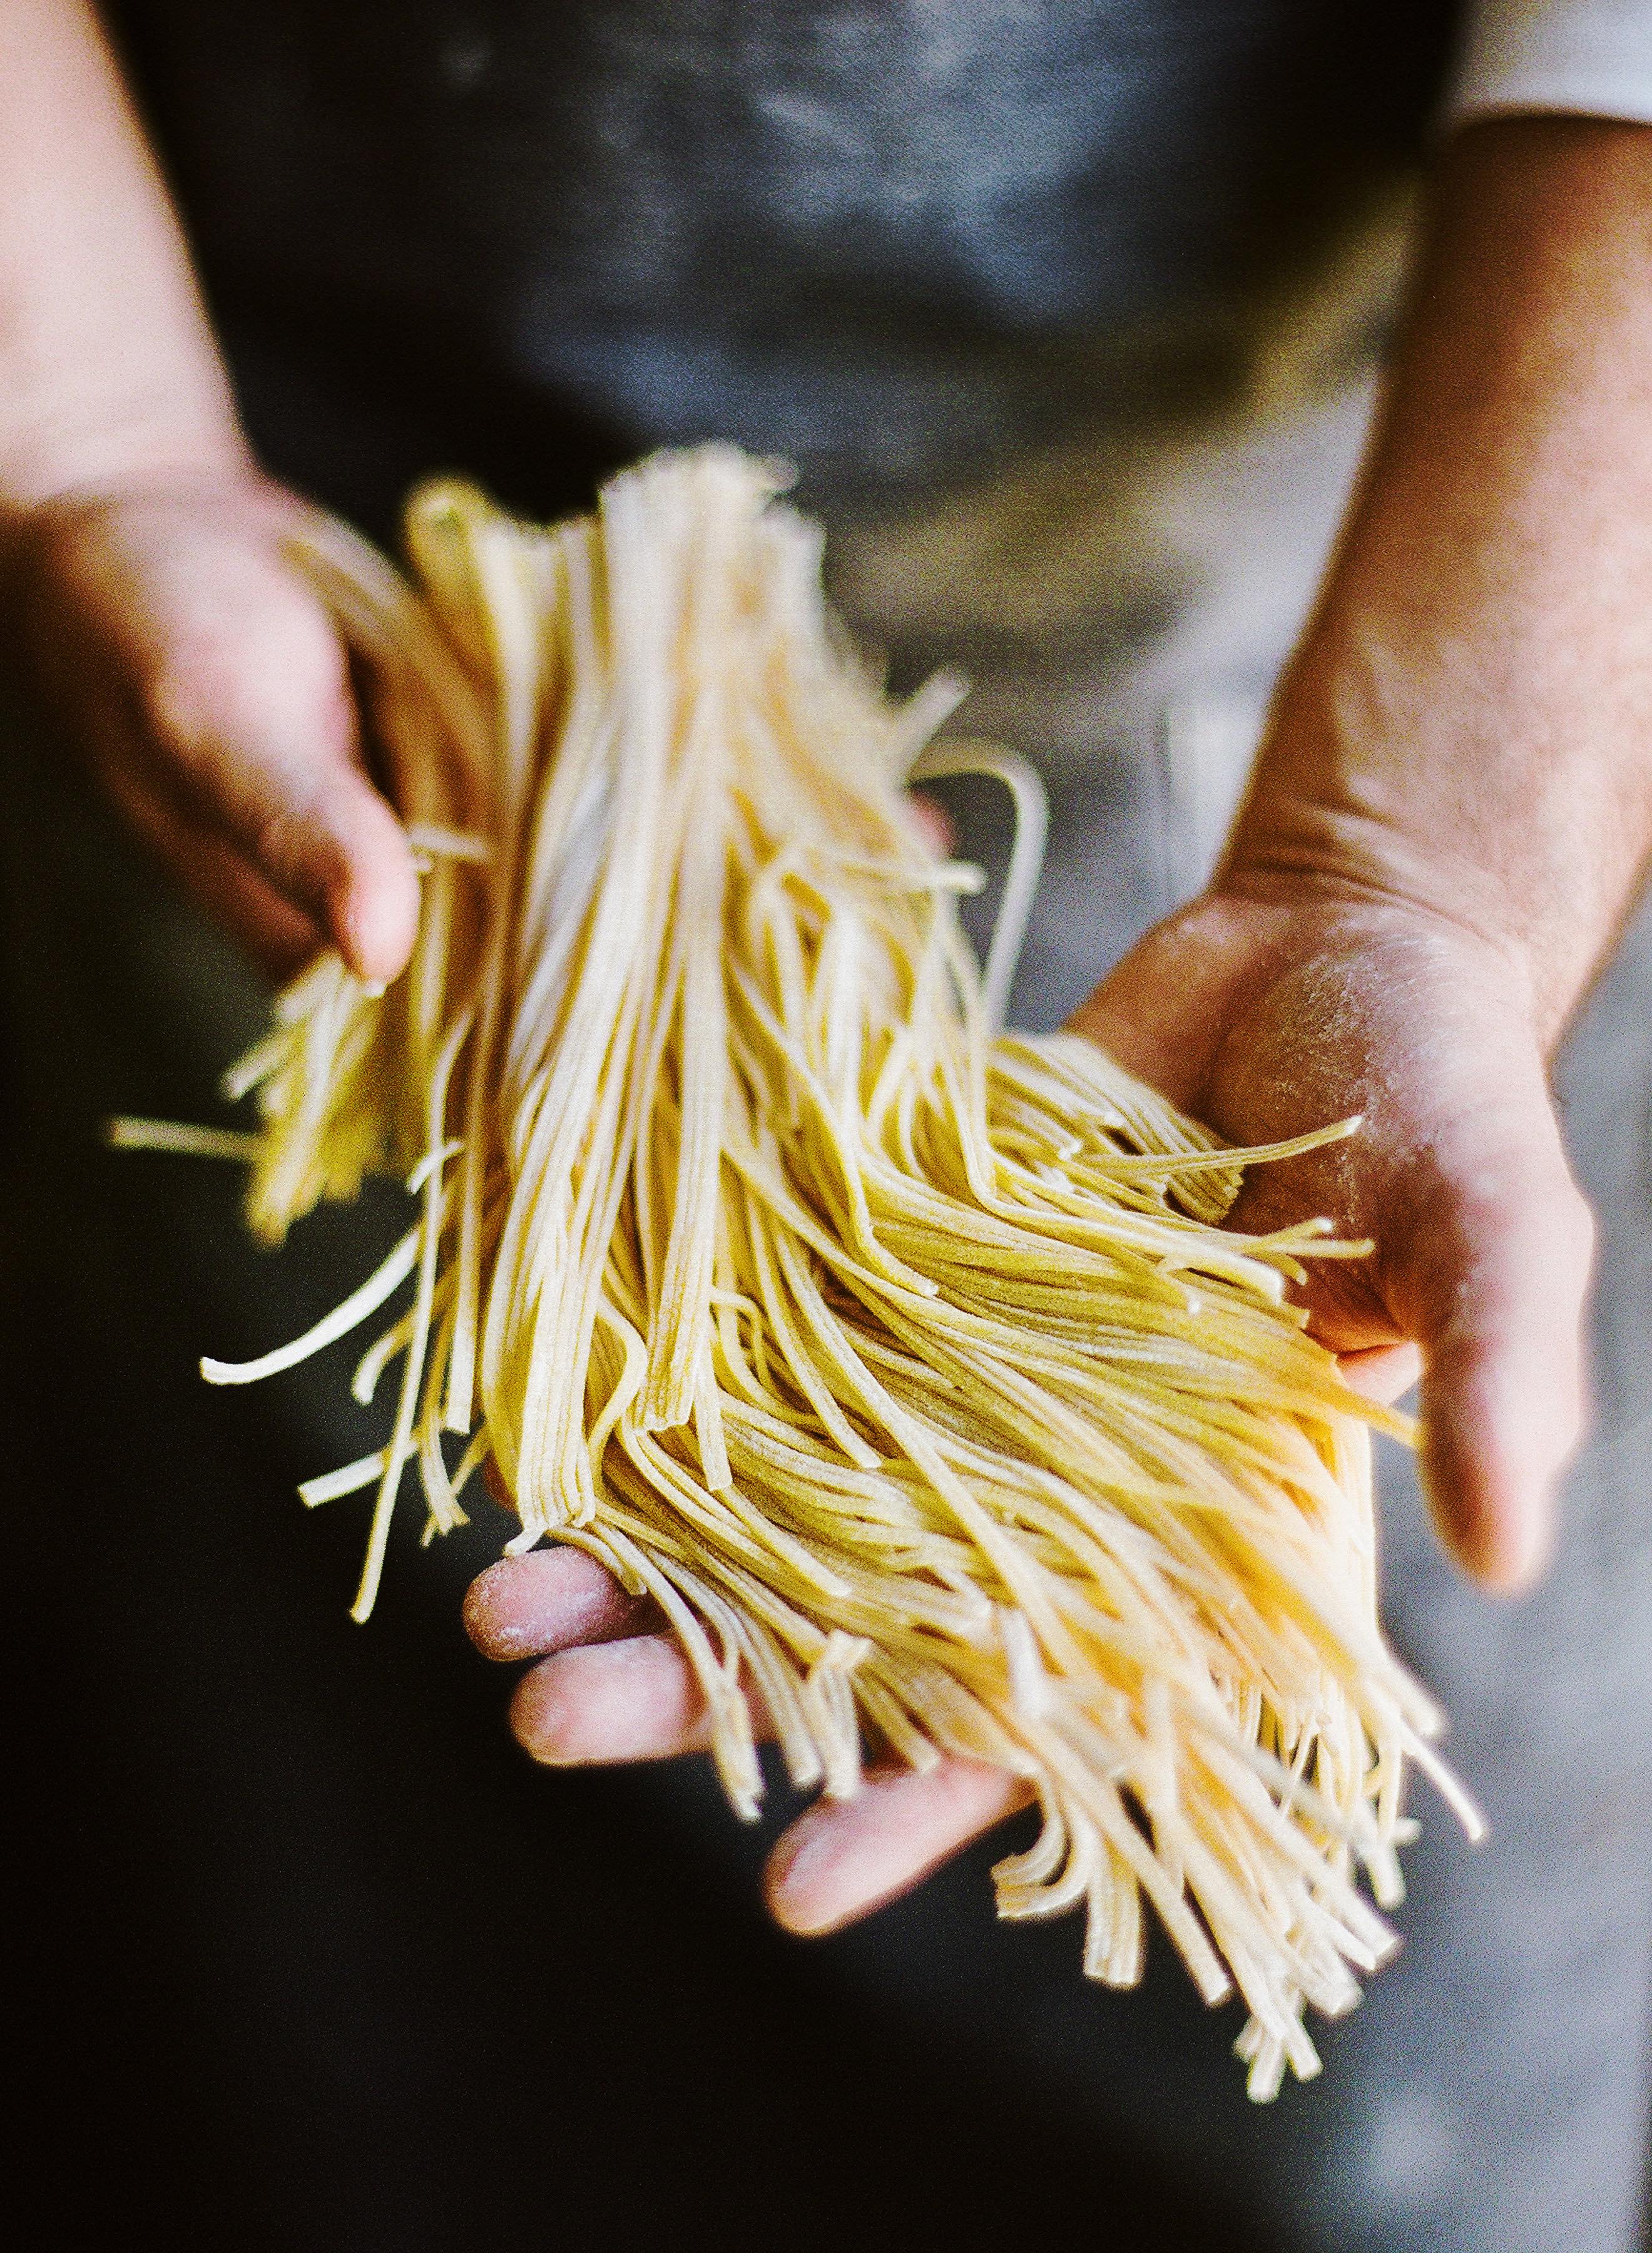 How to Master Making Homemade Pasta